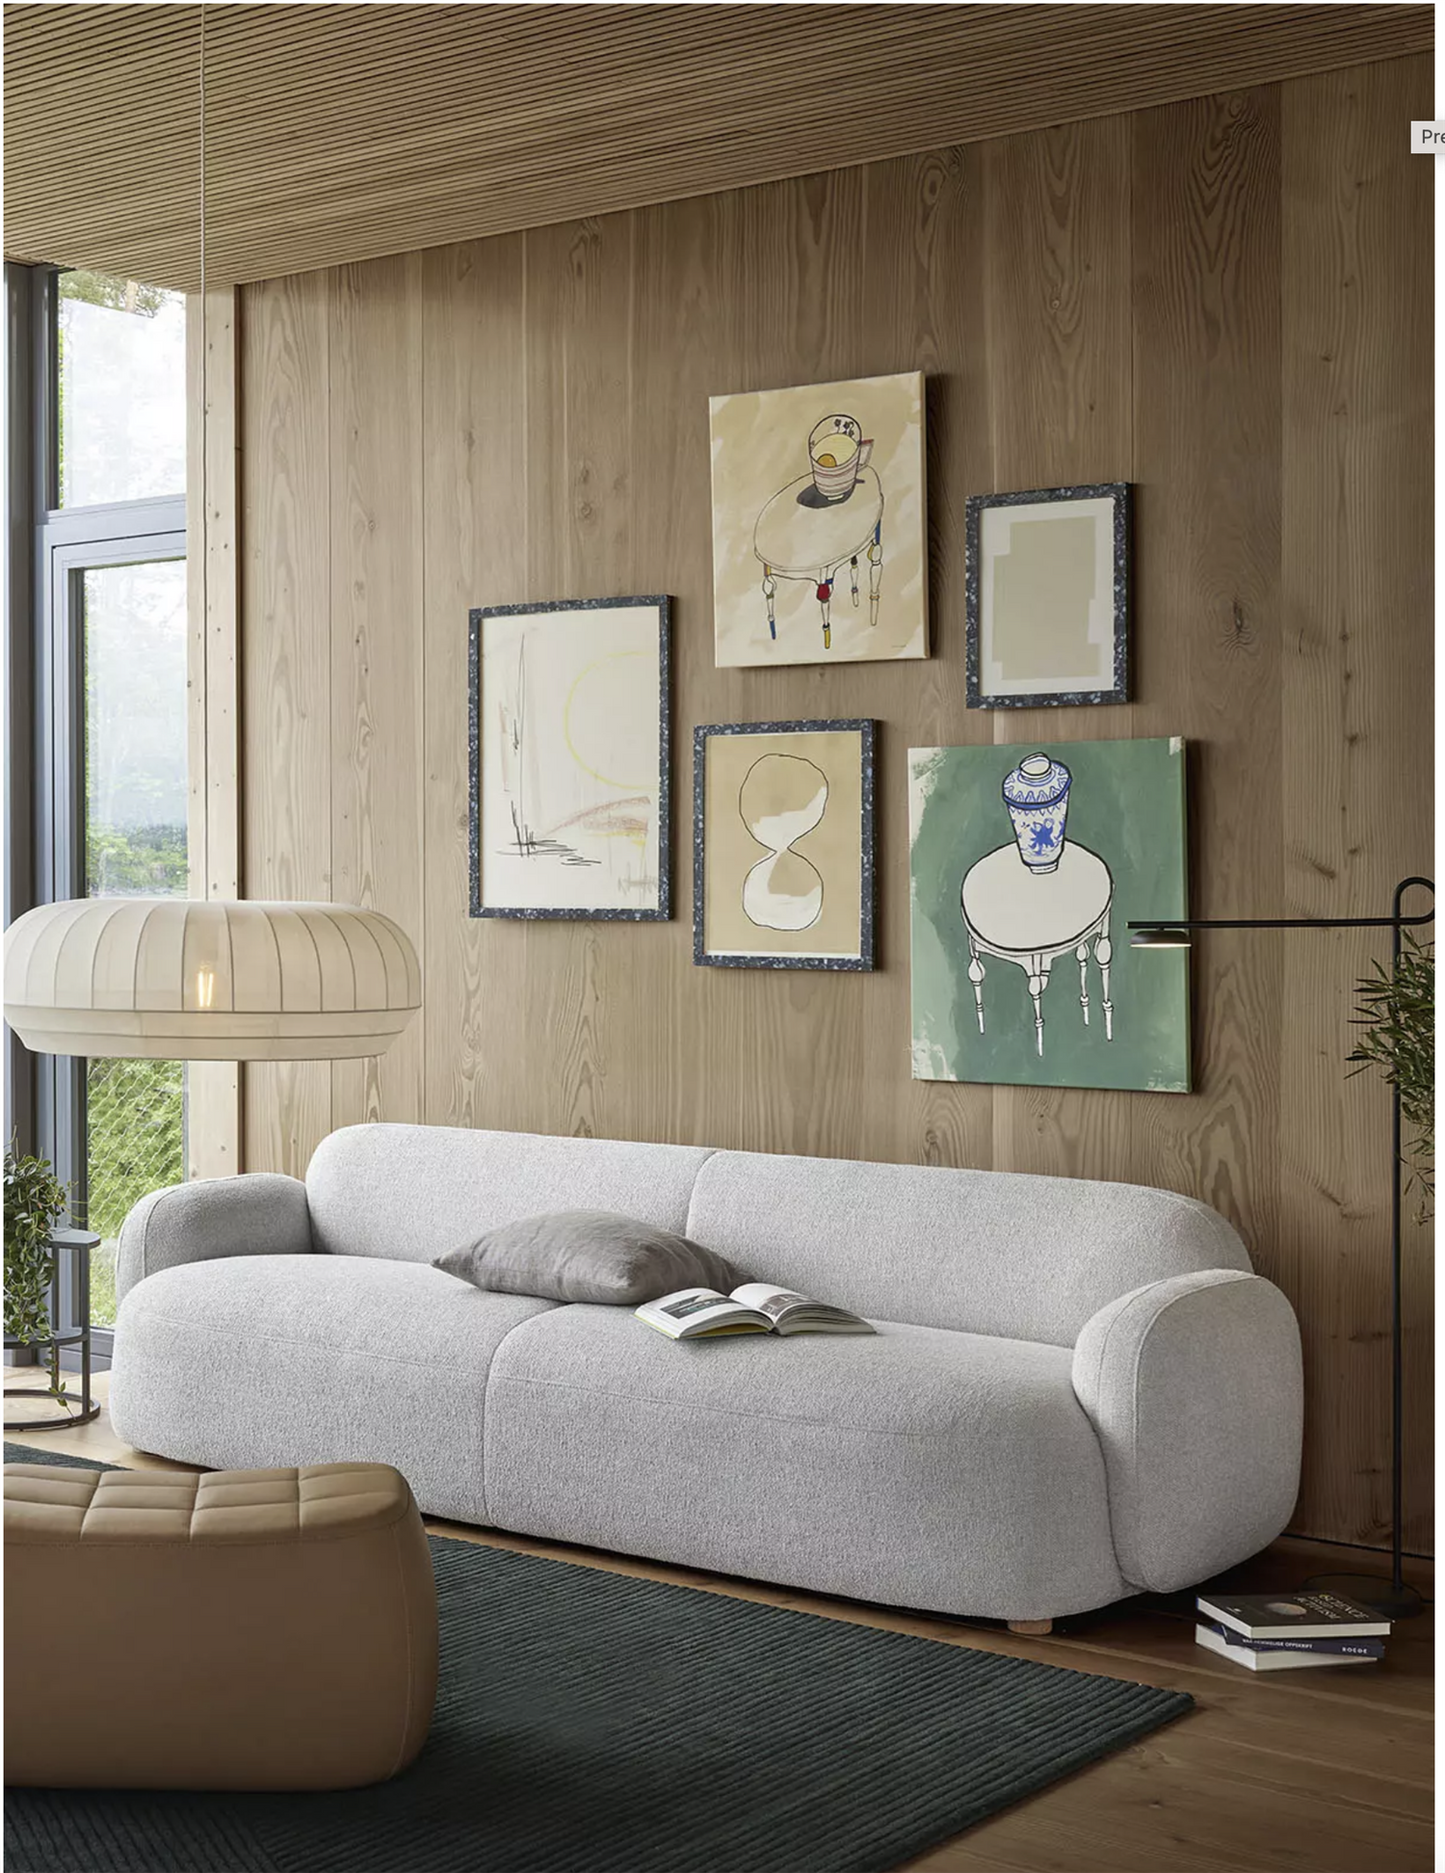 Gem sofa     Brusvik 02  light grey